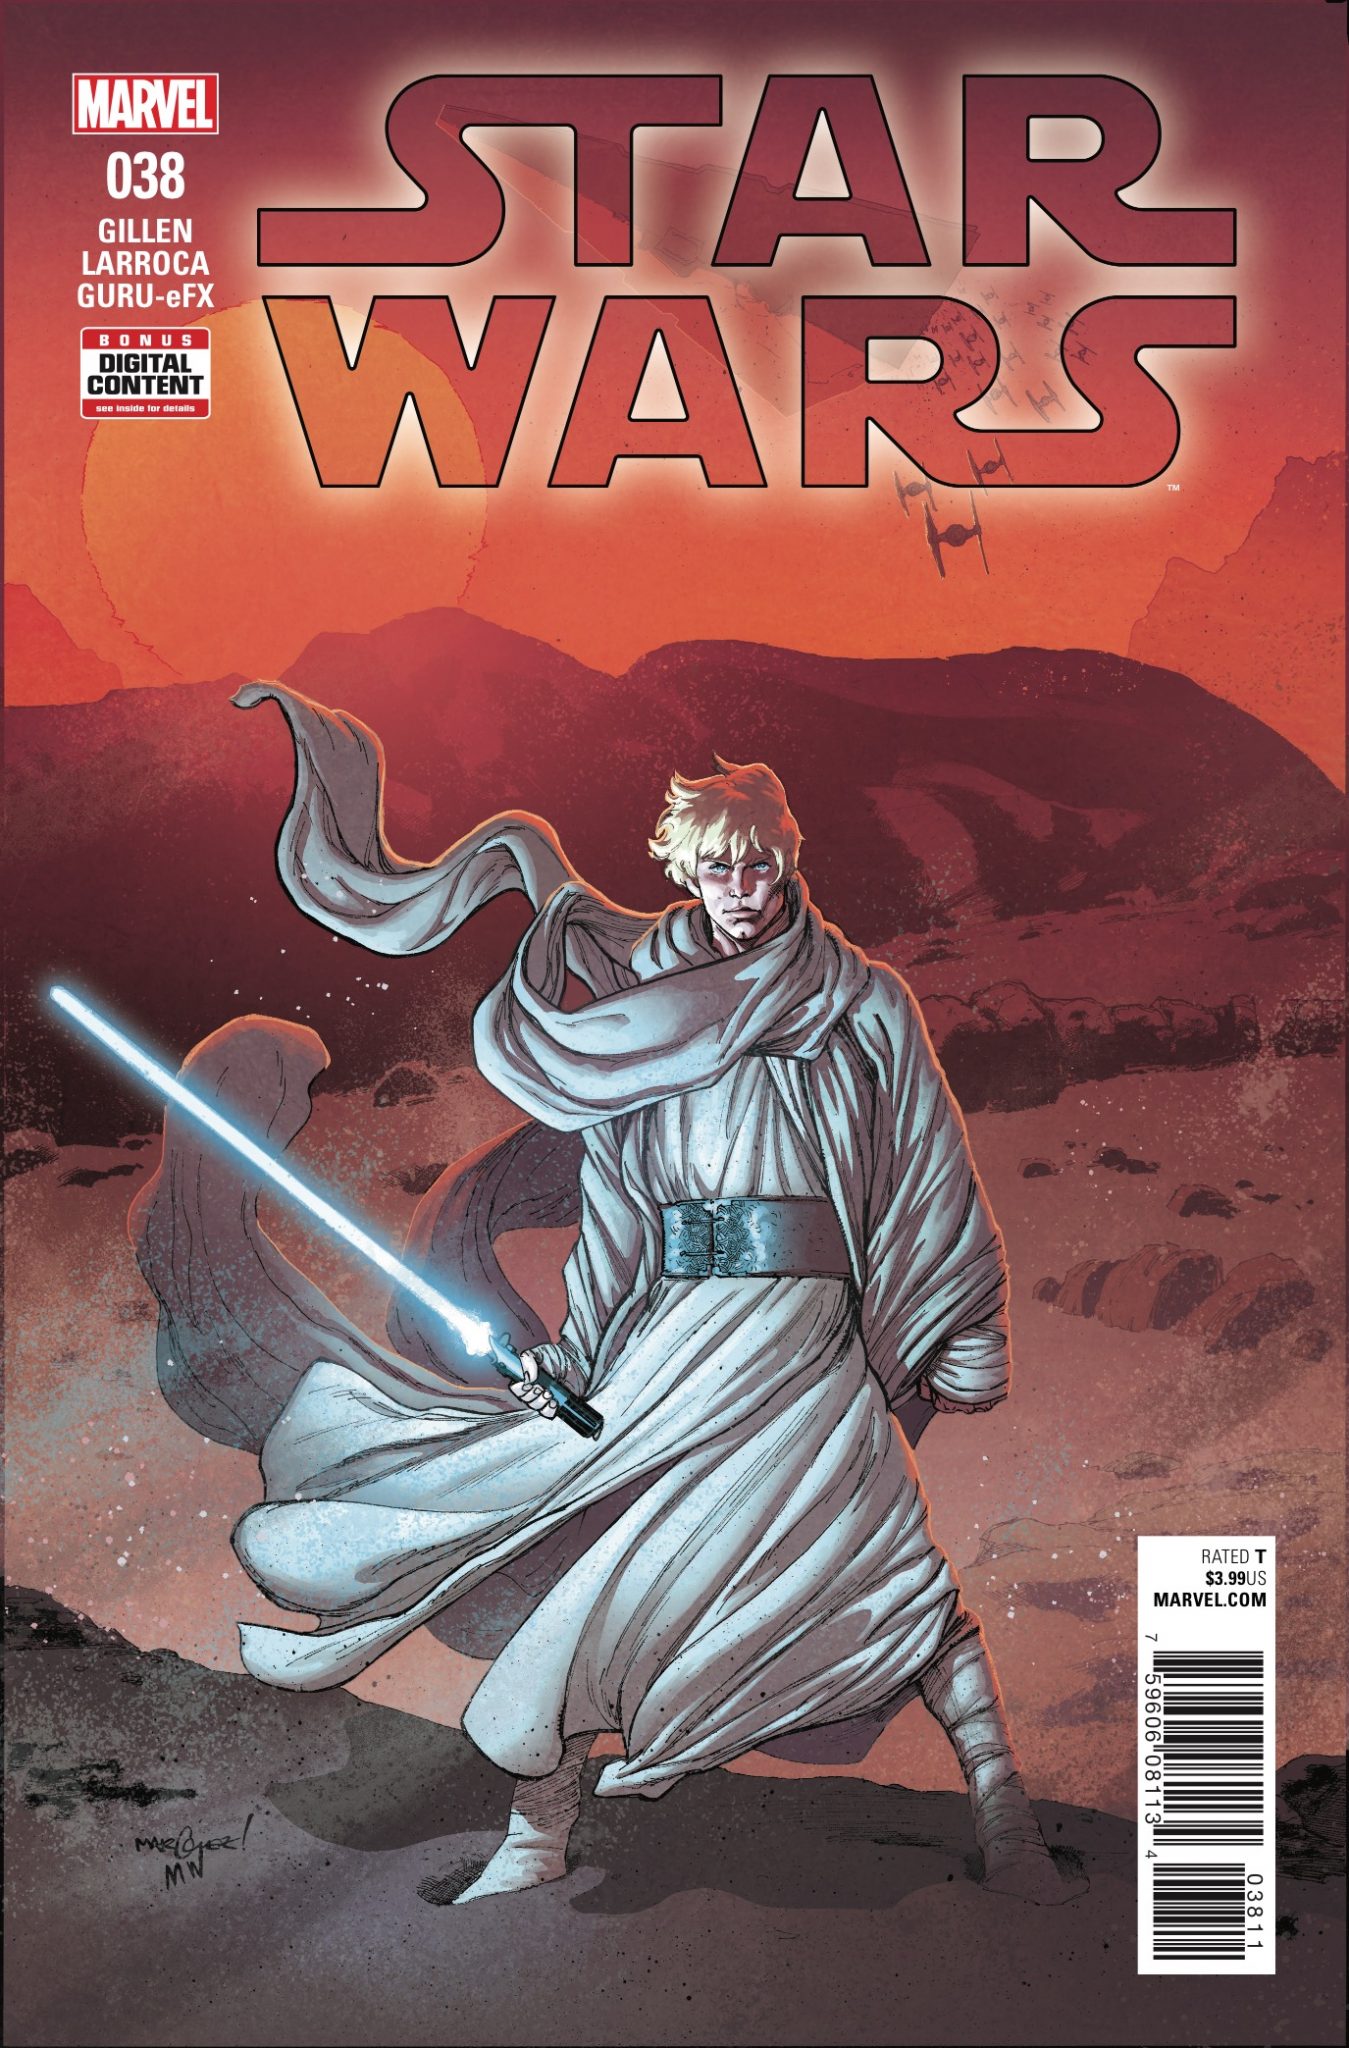 Star Wars #38 review: Jedha returns!